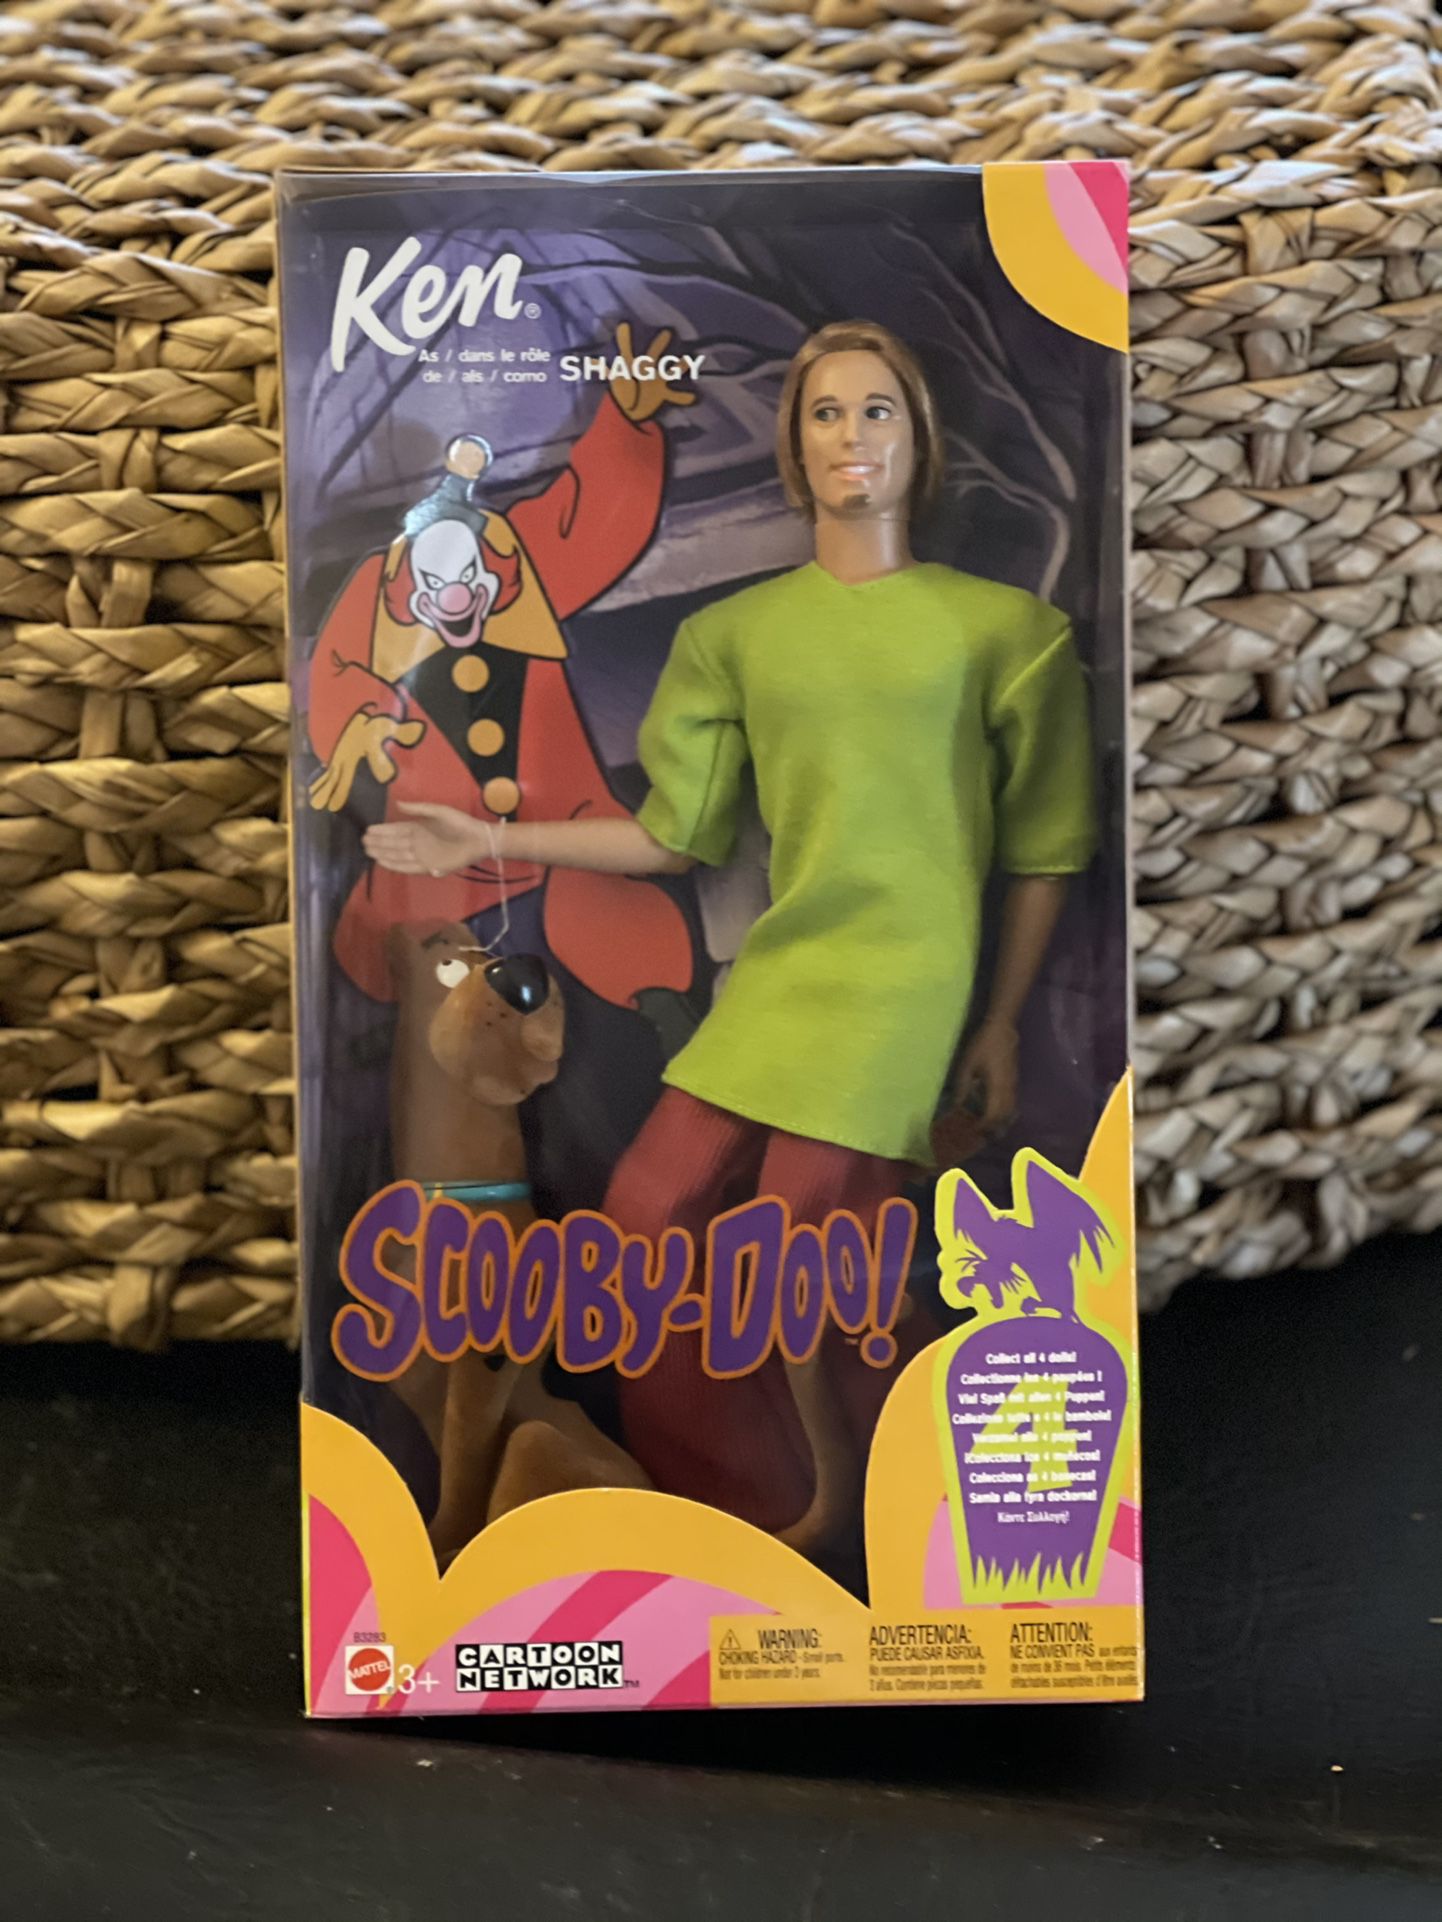 Barbie Scooby-Doo and Ken as Shaggy, #B3283, 2002, Cartoon Network, NRFB